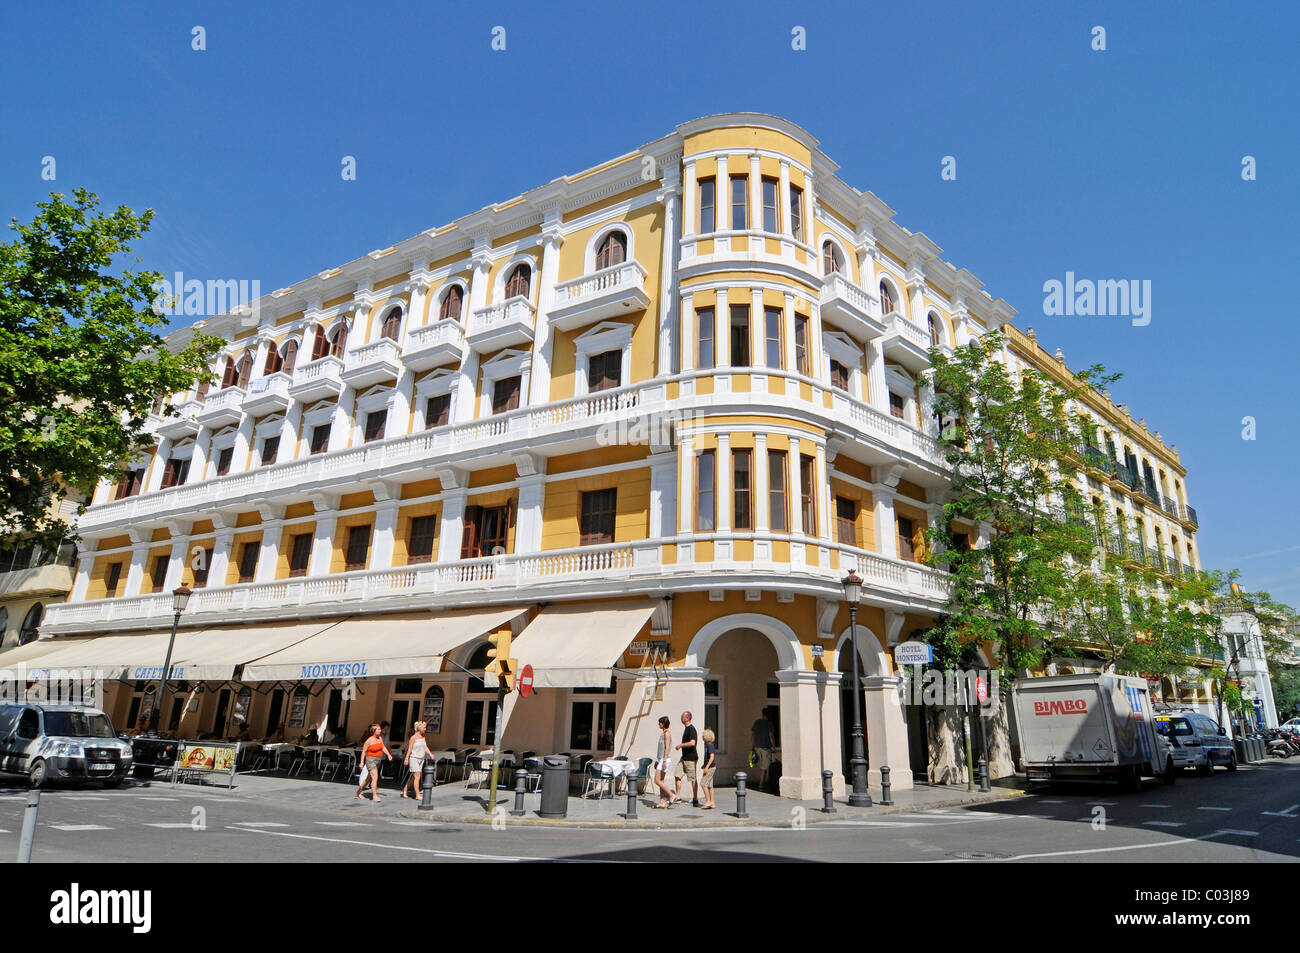 Montesol, famous cafe, hotel, Passeig de Vara de Rey, Paseo, square, Ibiza, Pityuses, Balearic Island, Spain, Europe Stock Photo